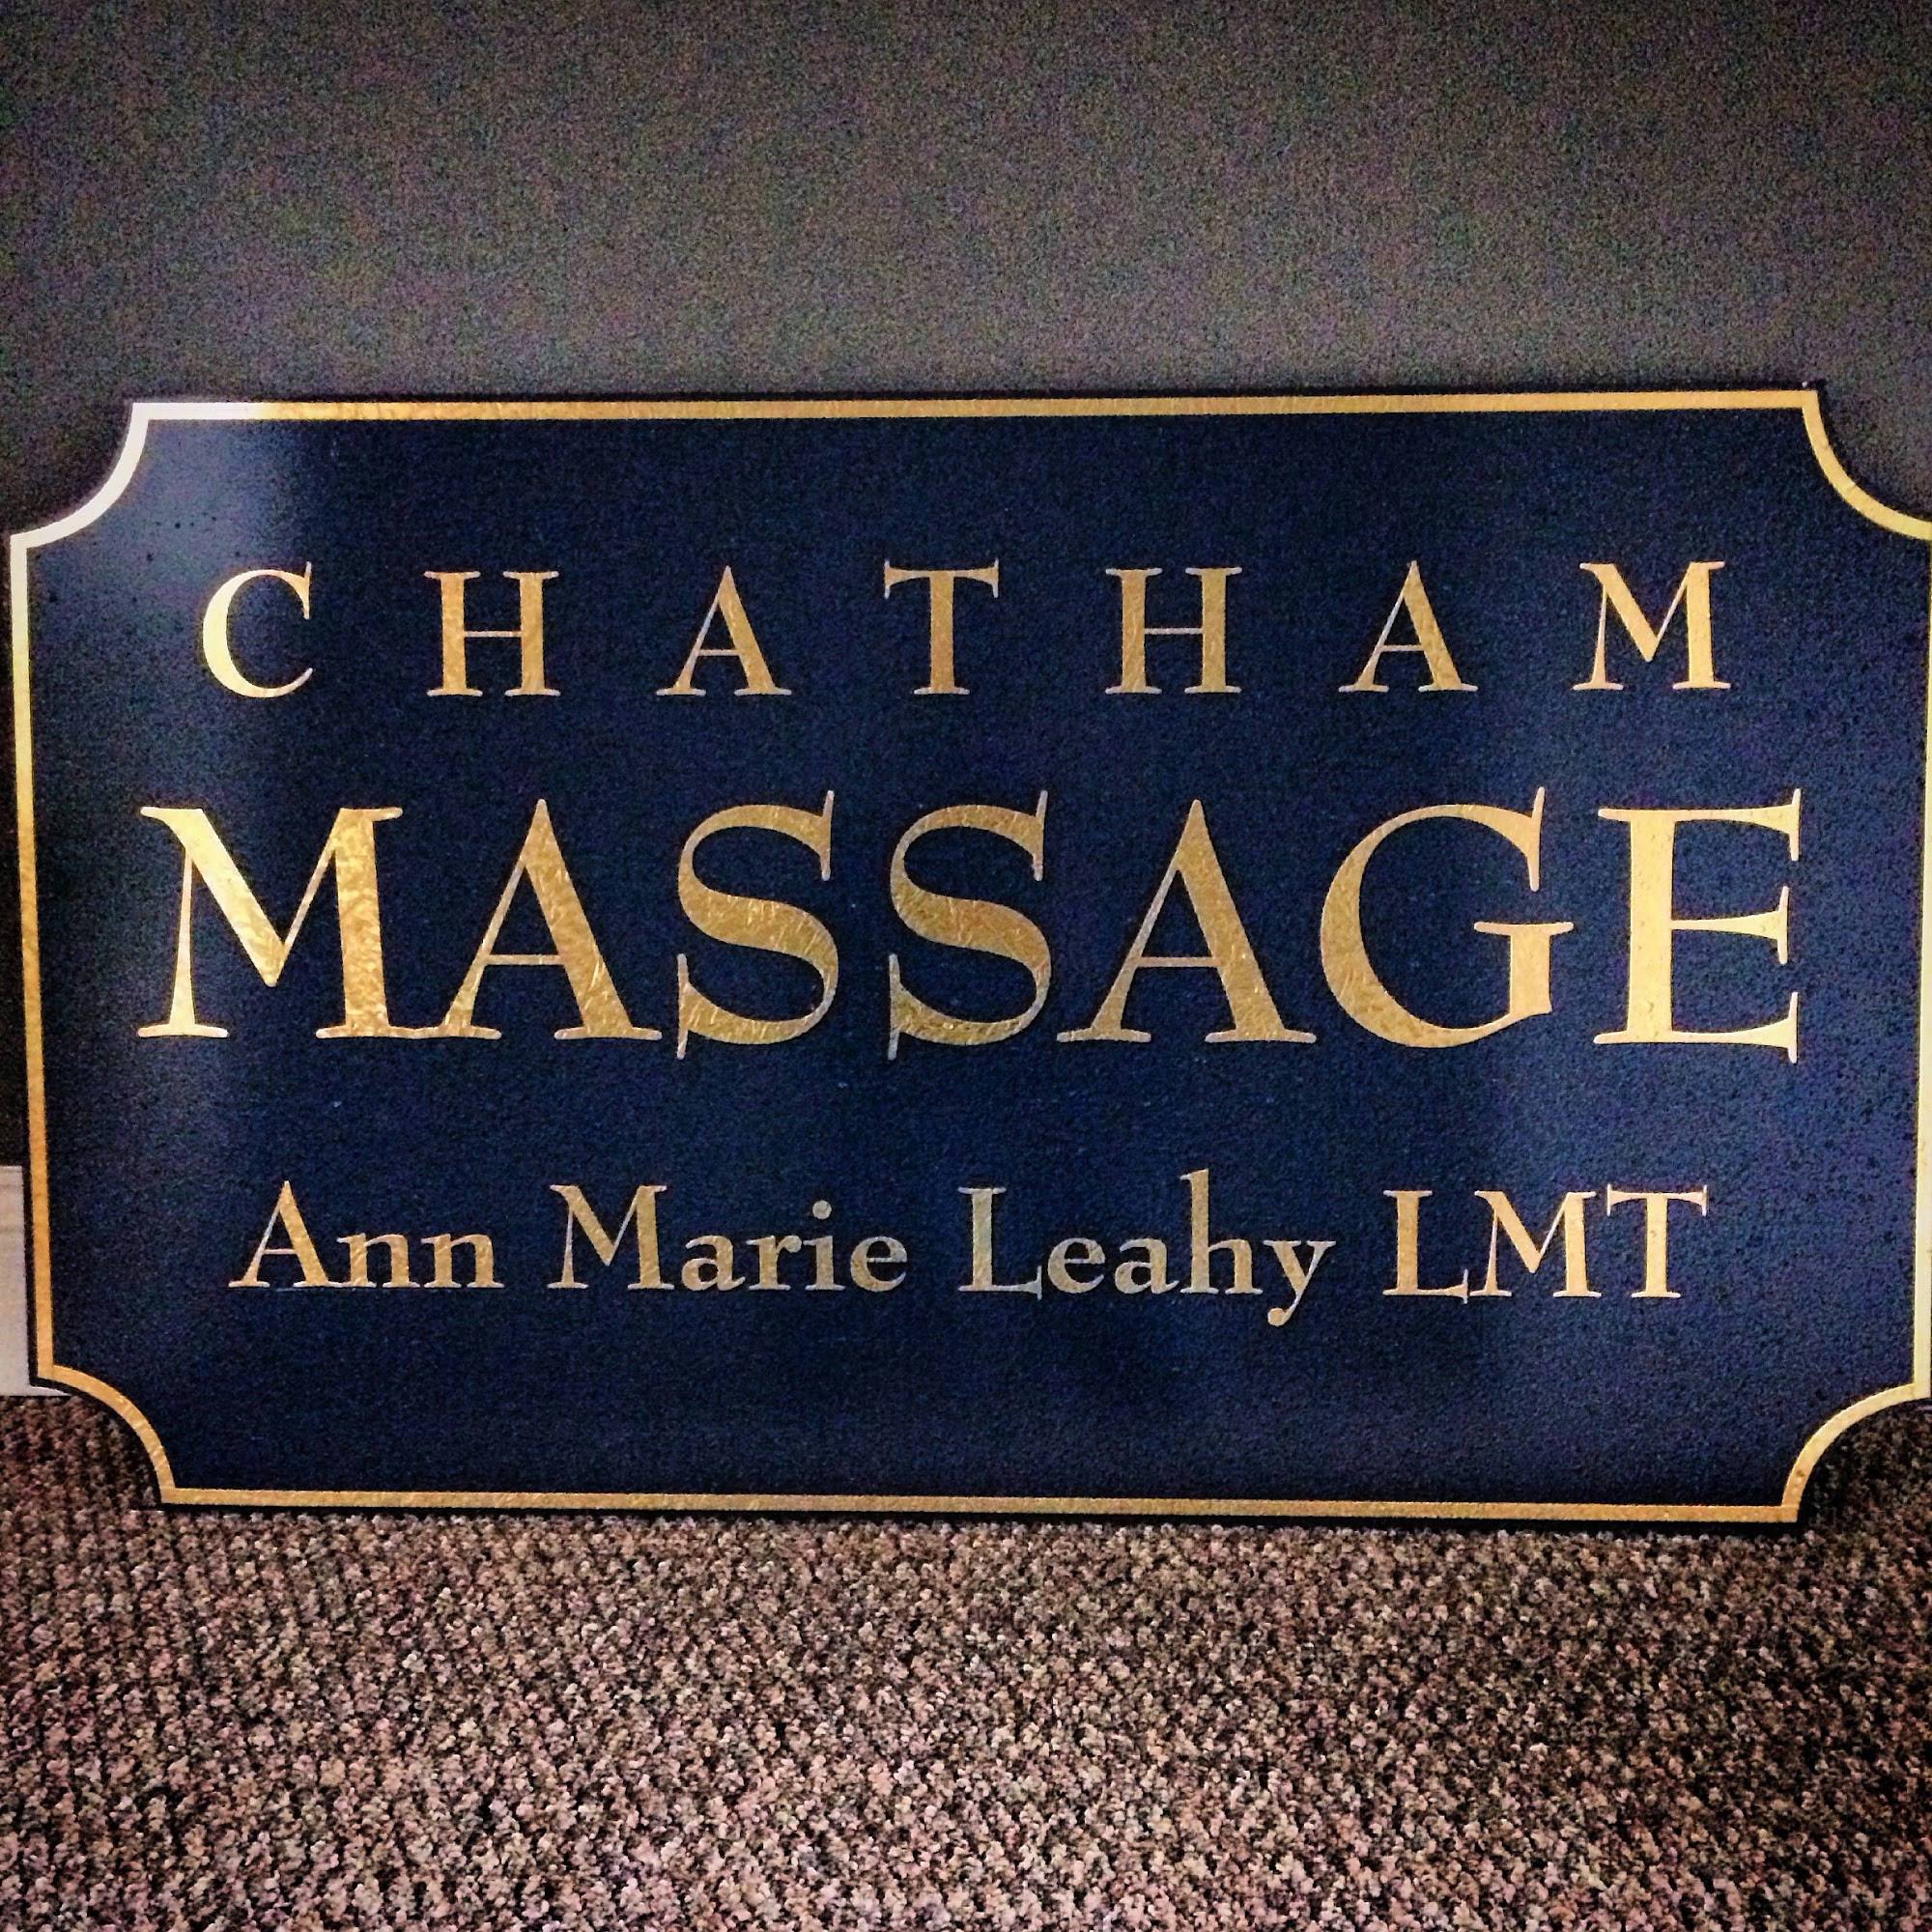 Chatham Massage Ann Marie Leahy LMT 935 Main St #2, Chatham Massachusetts 02633